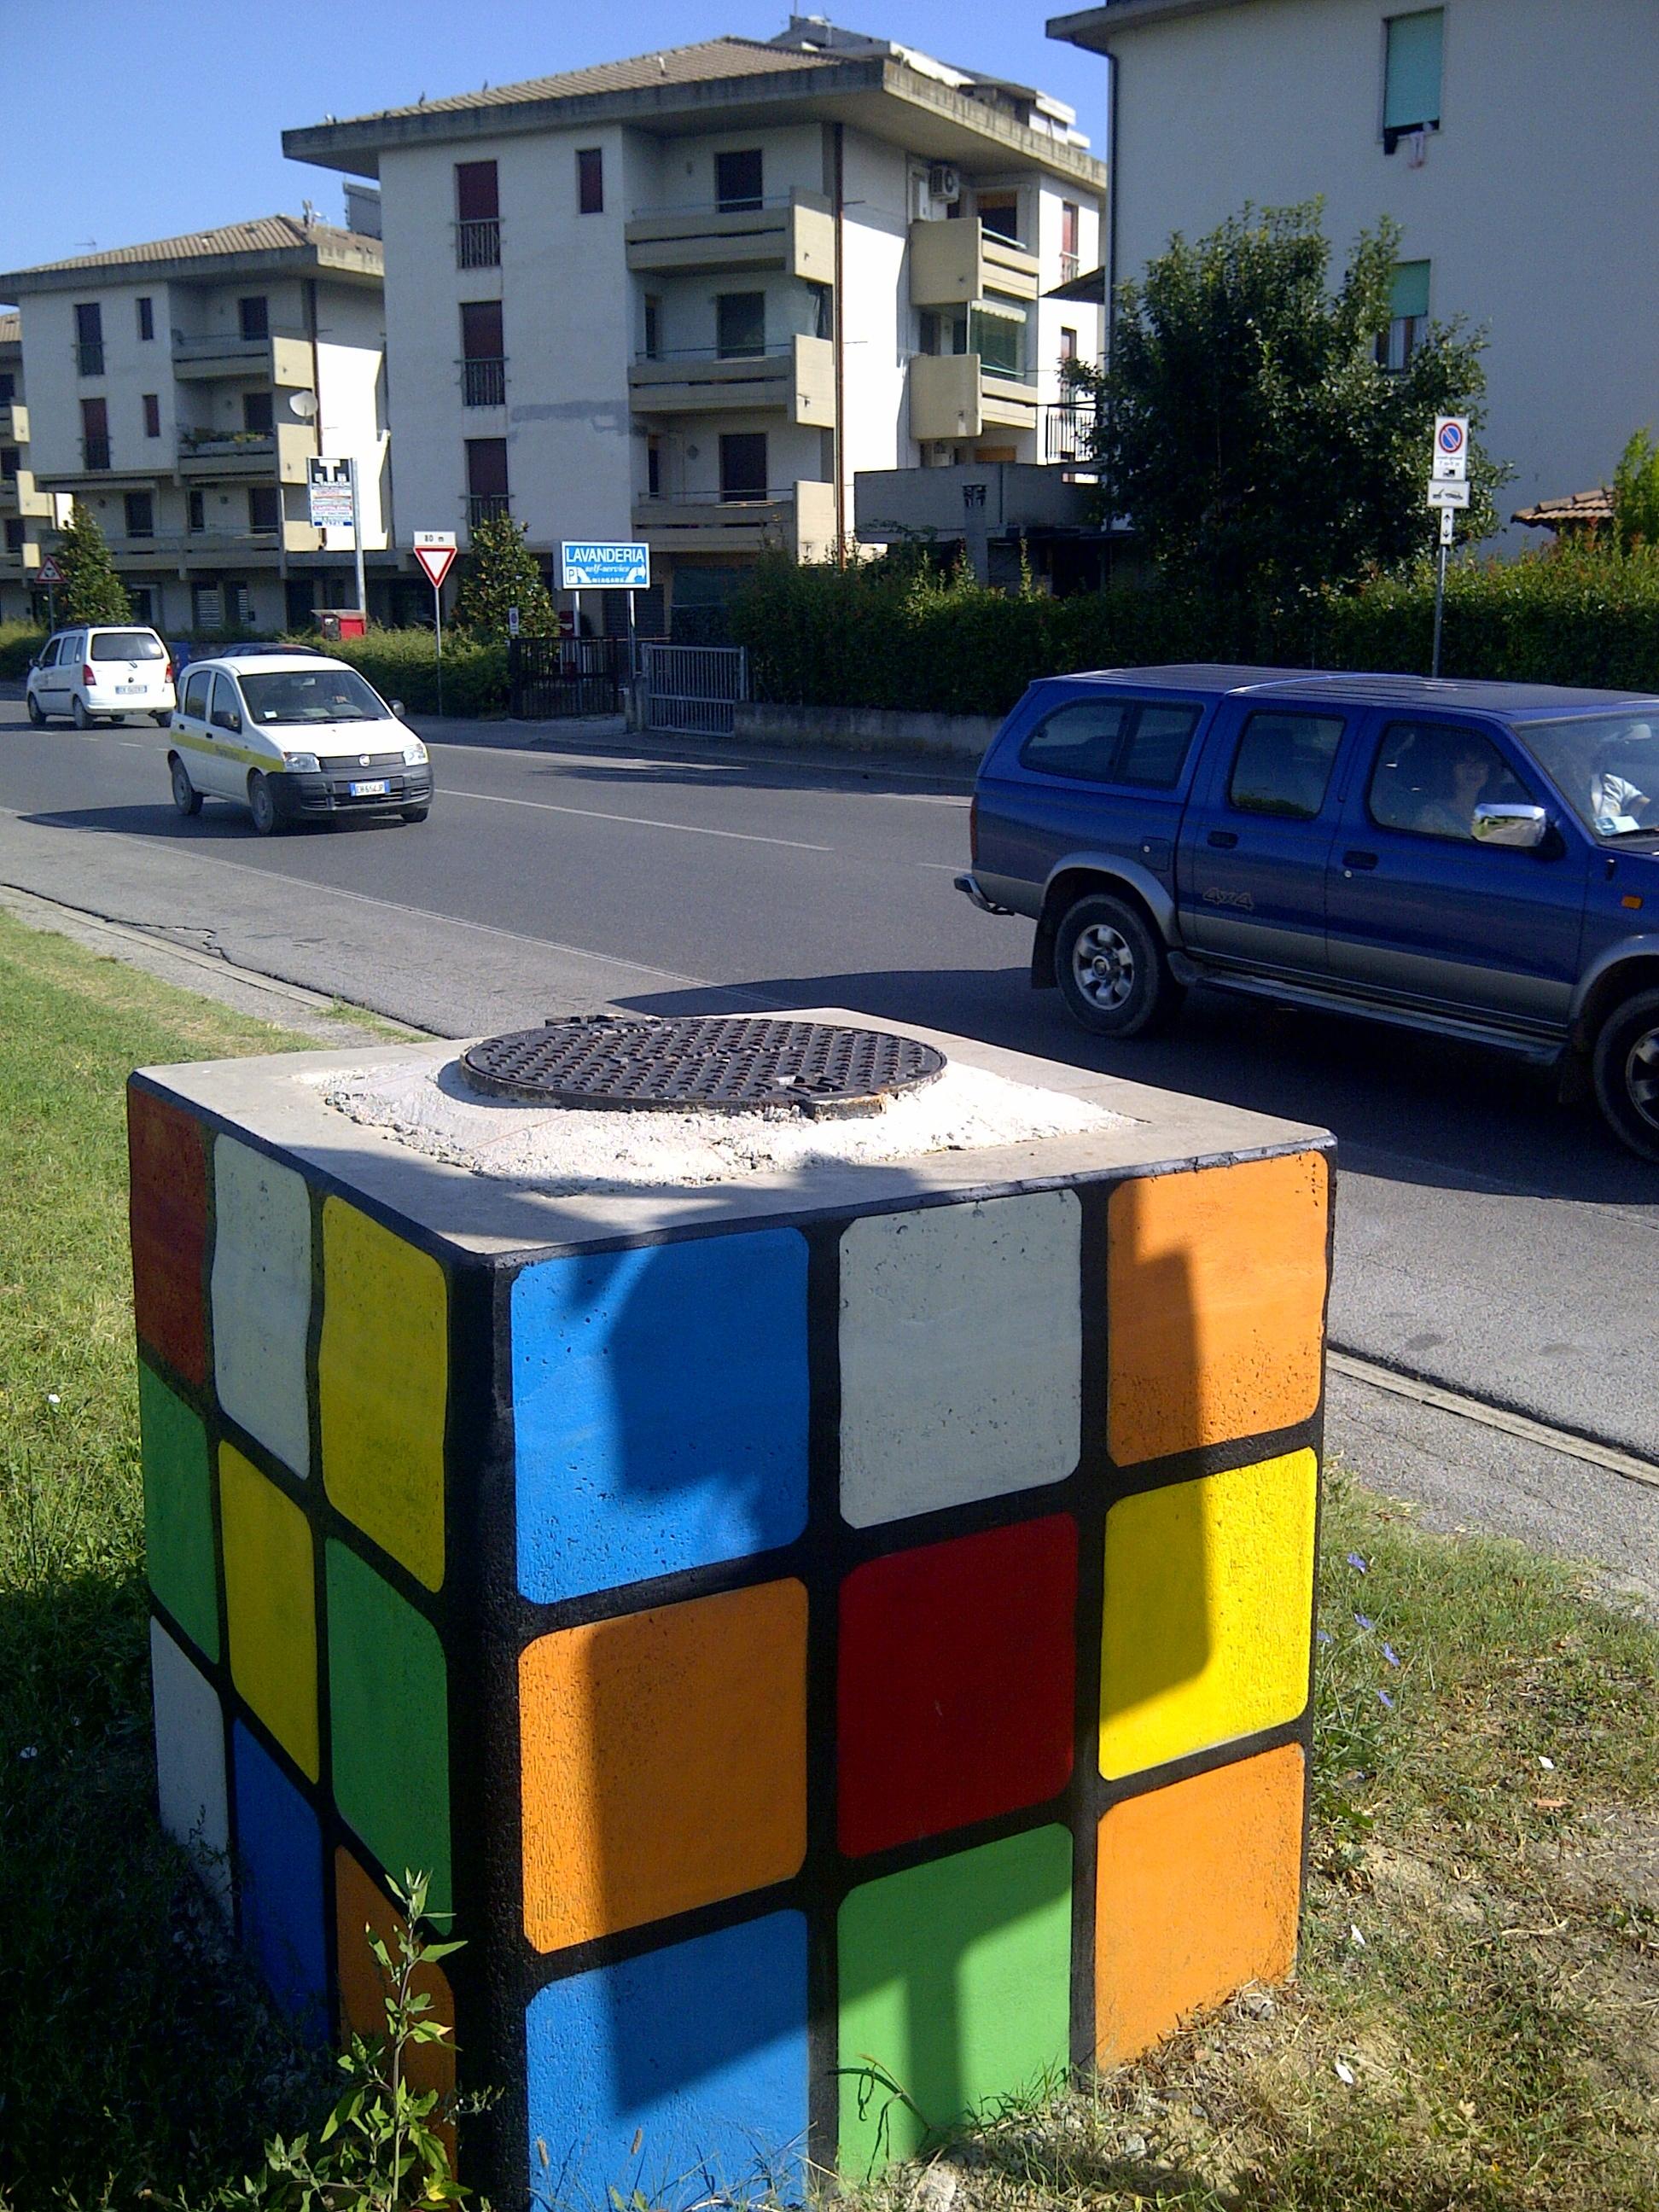  “Cubo di Rubik”